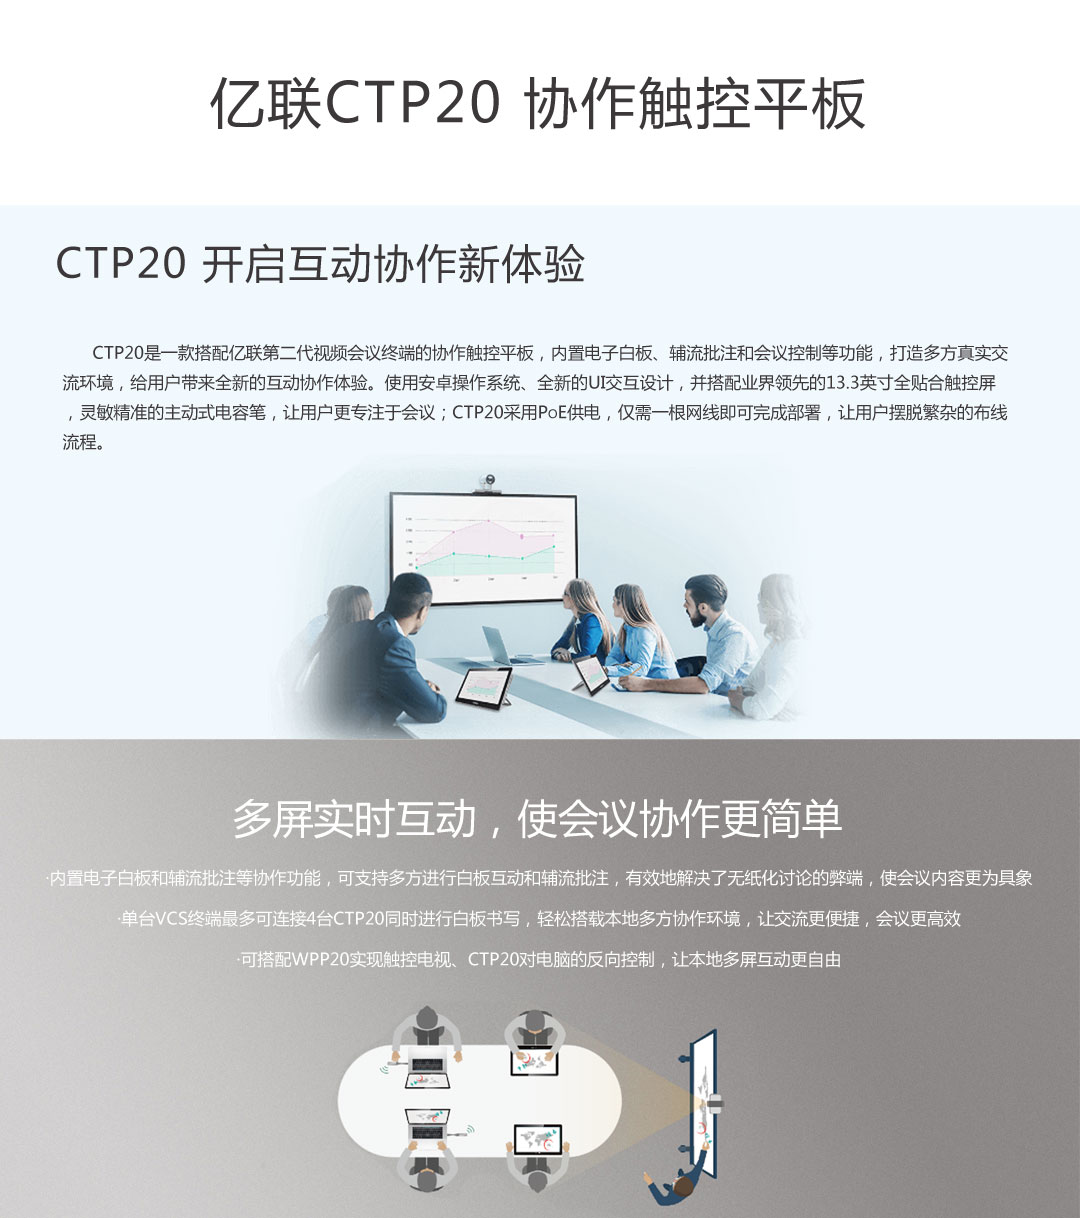 ctp20触控平板_01.jpg